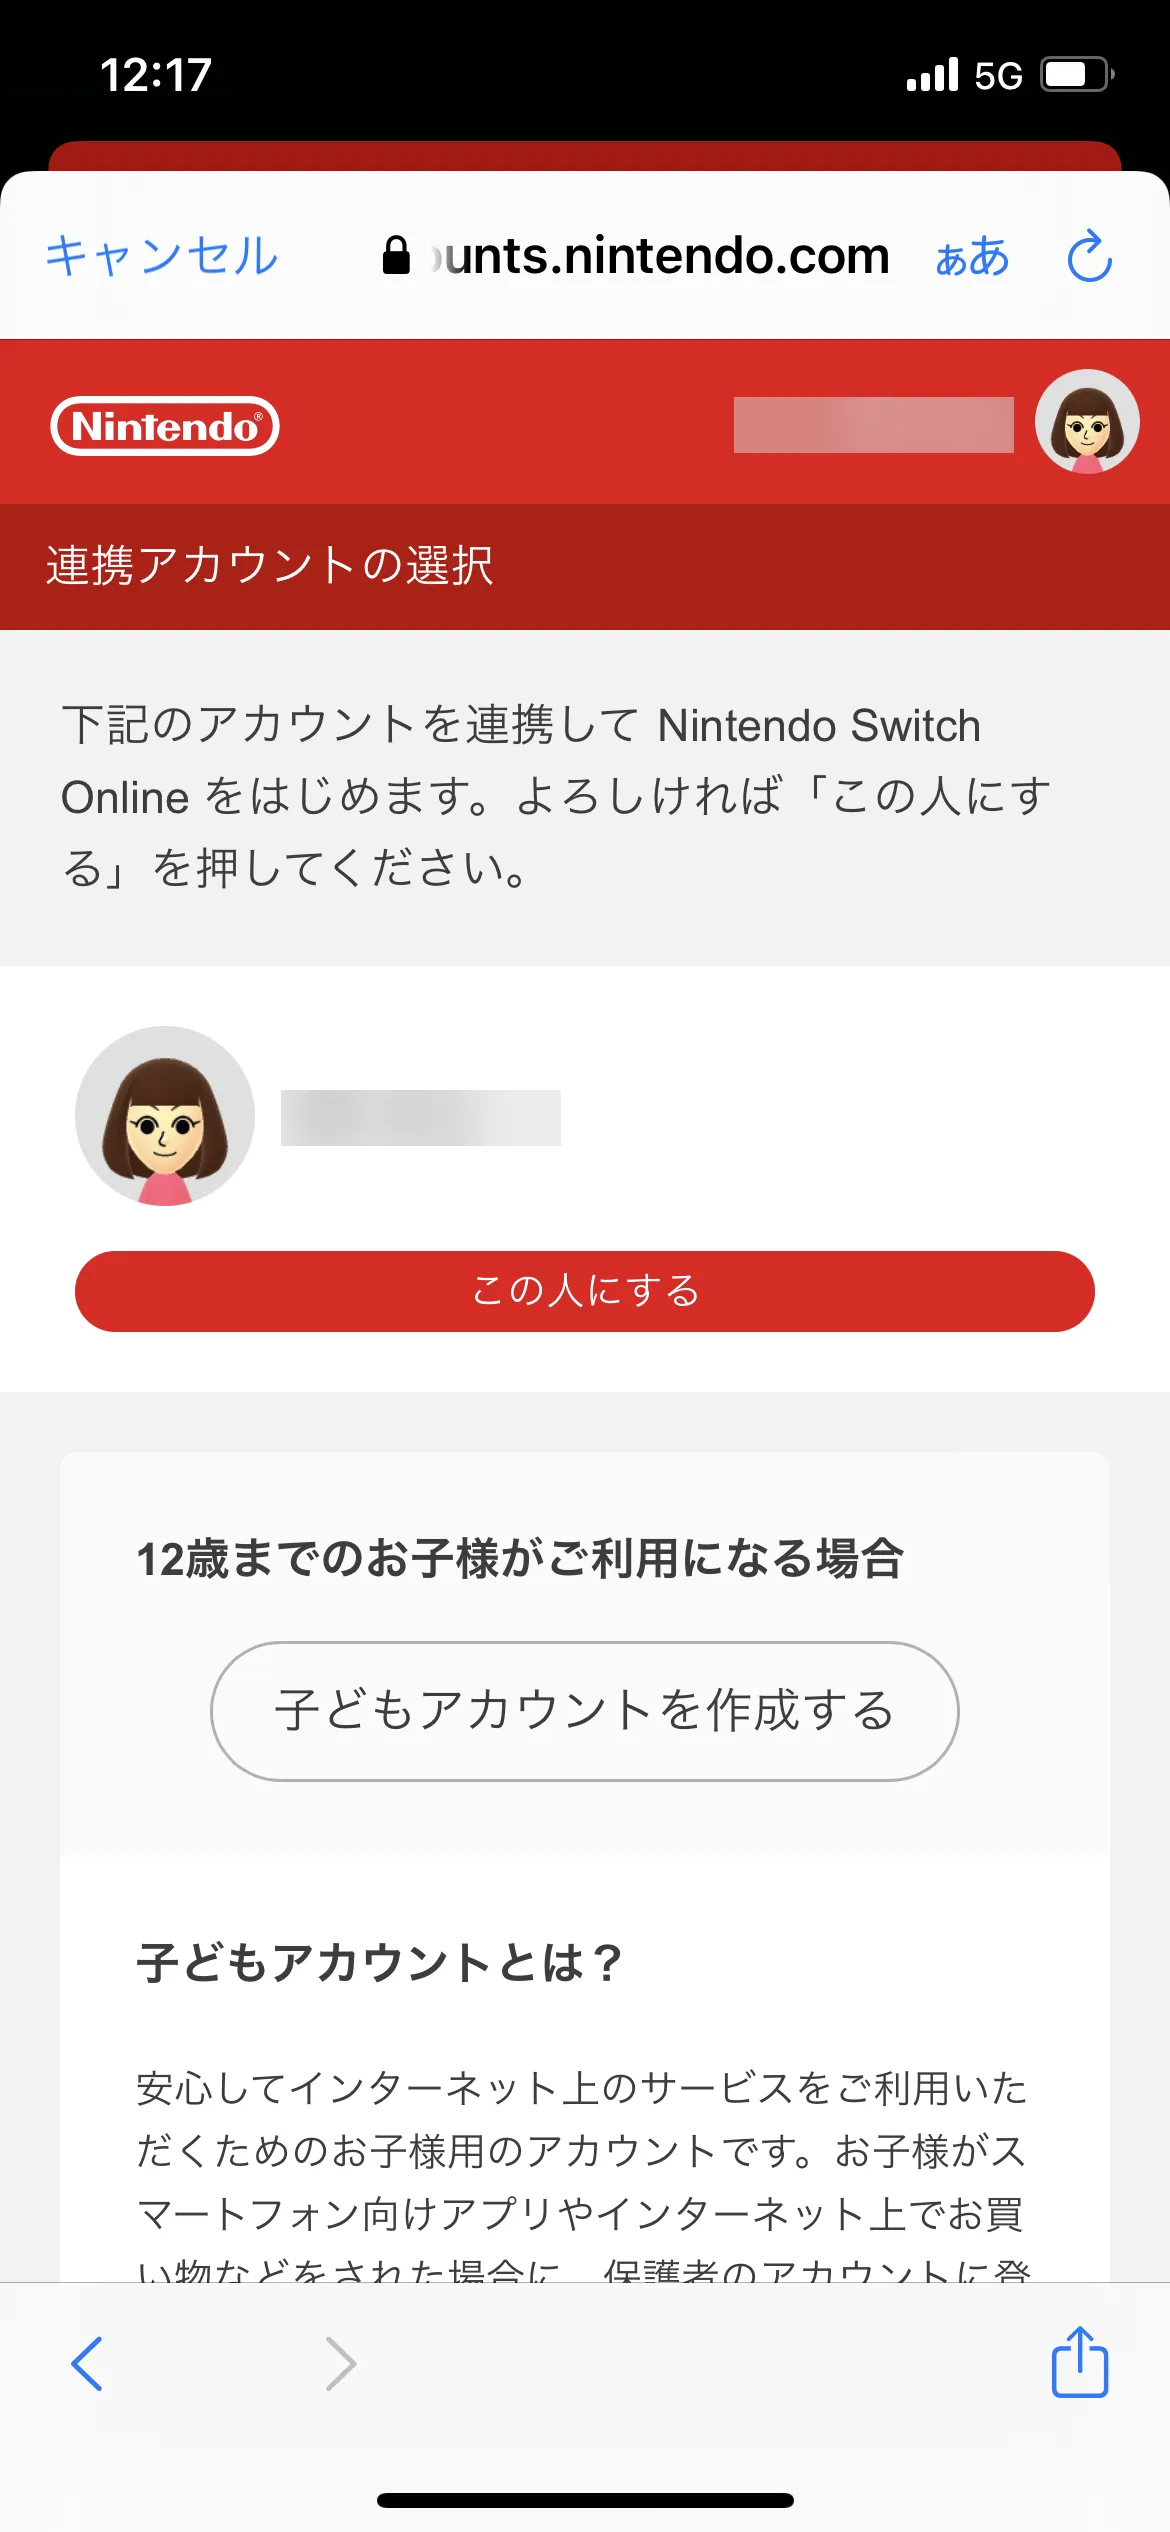 Nintendo Switch Online オンボーディング screen